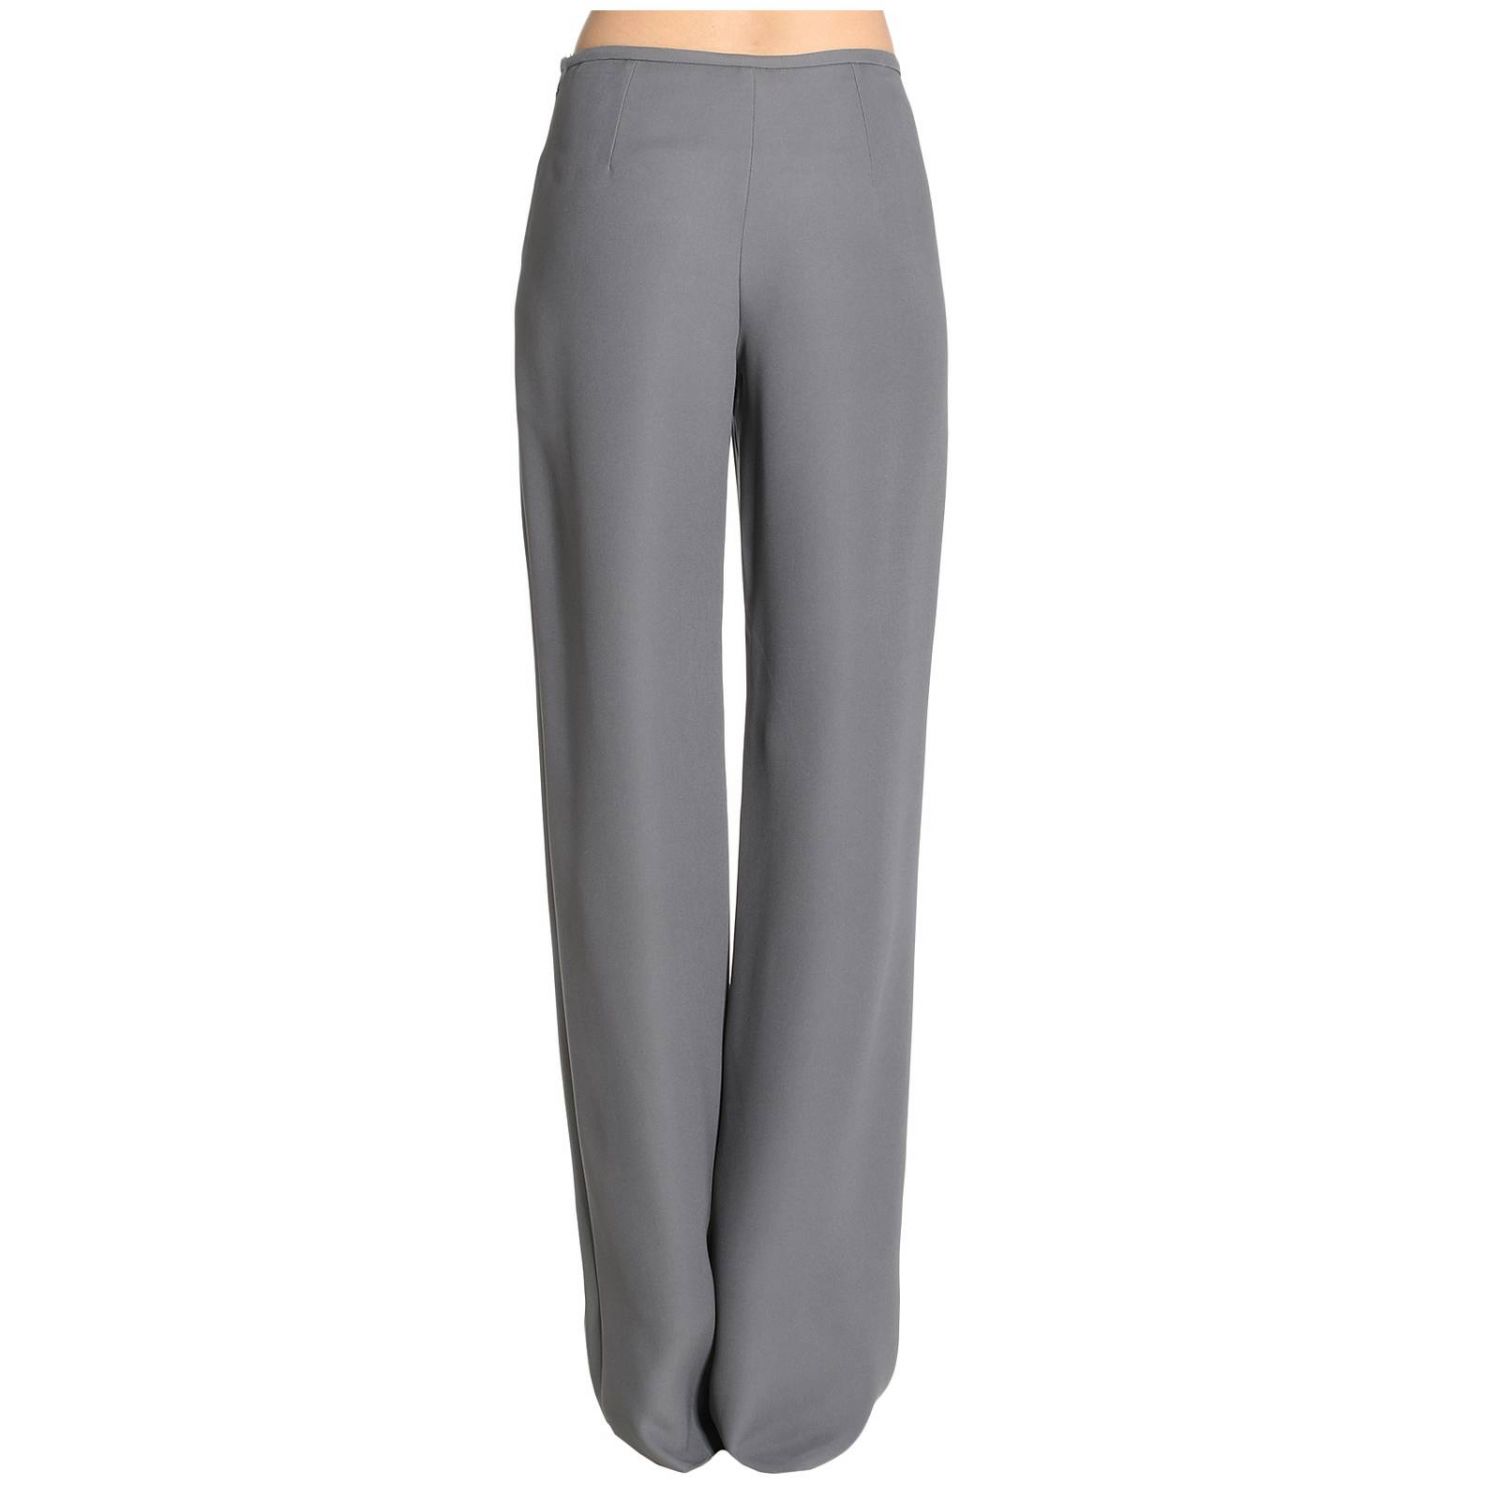 Emporio Armani Outlet: Pants women | Pants Emporio Armani Women Grey ...